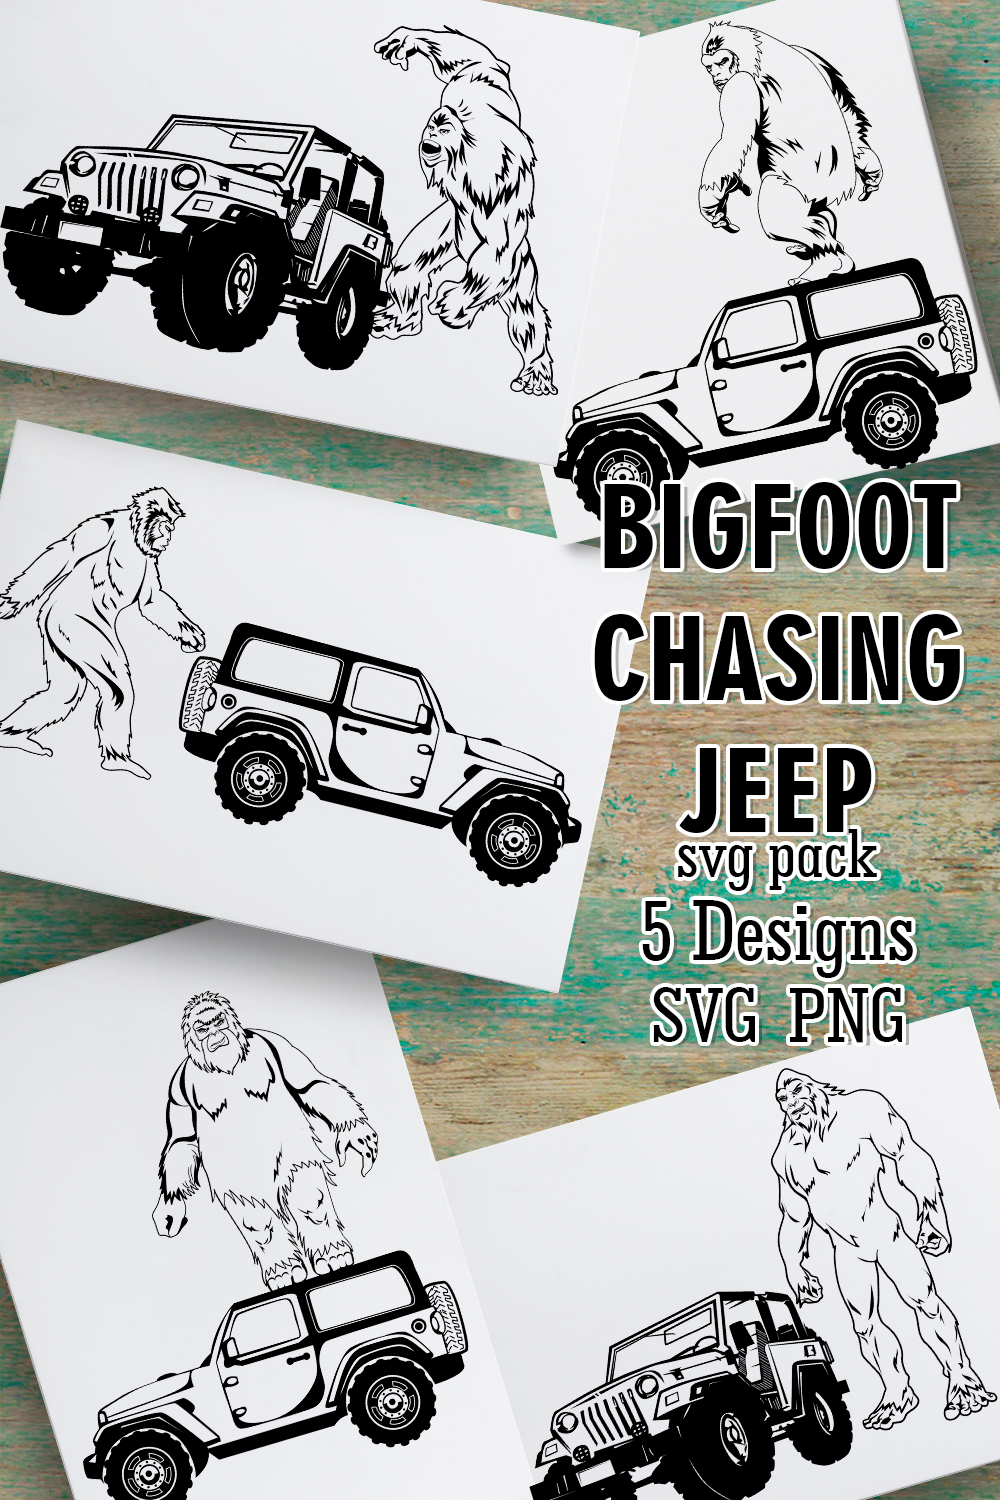 Bigfoot Chasing Jeep Svg - Pinterest.